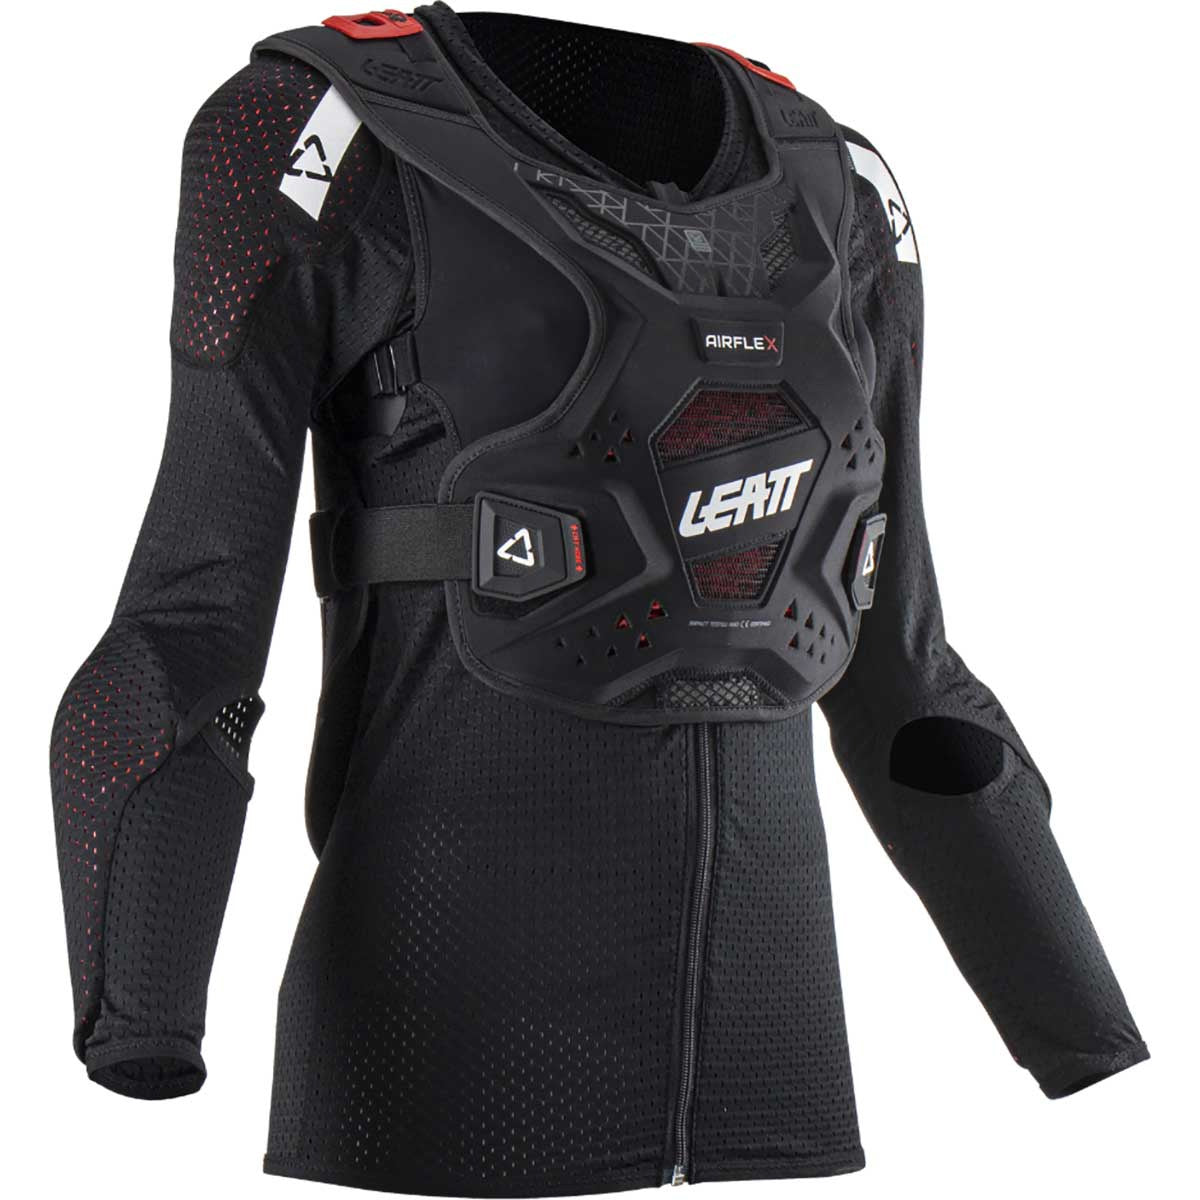 Leatt AirFlex Protector Women's Off-Road Body Armor 